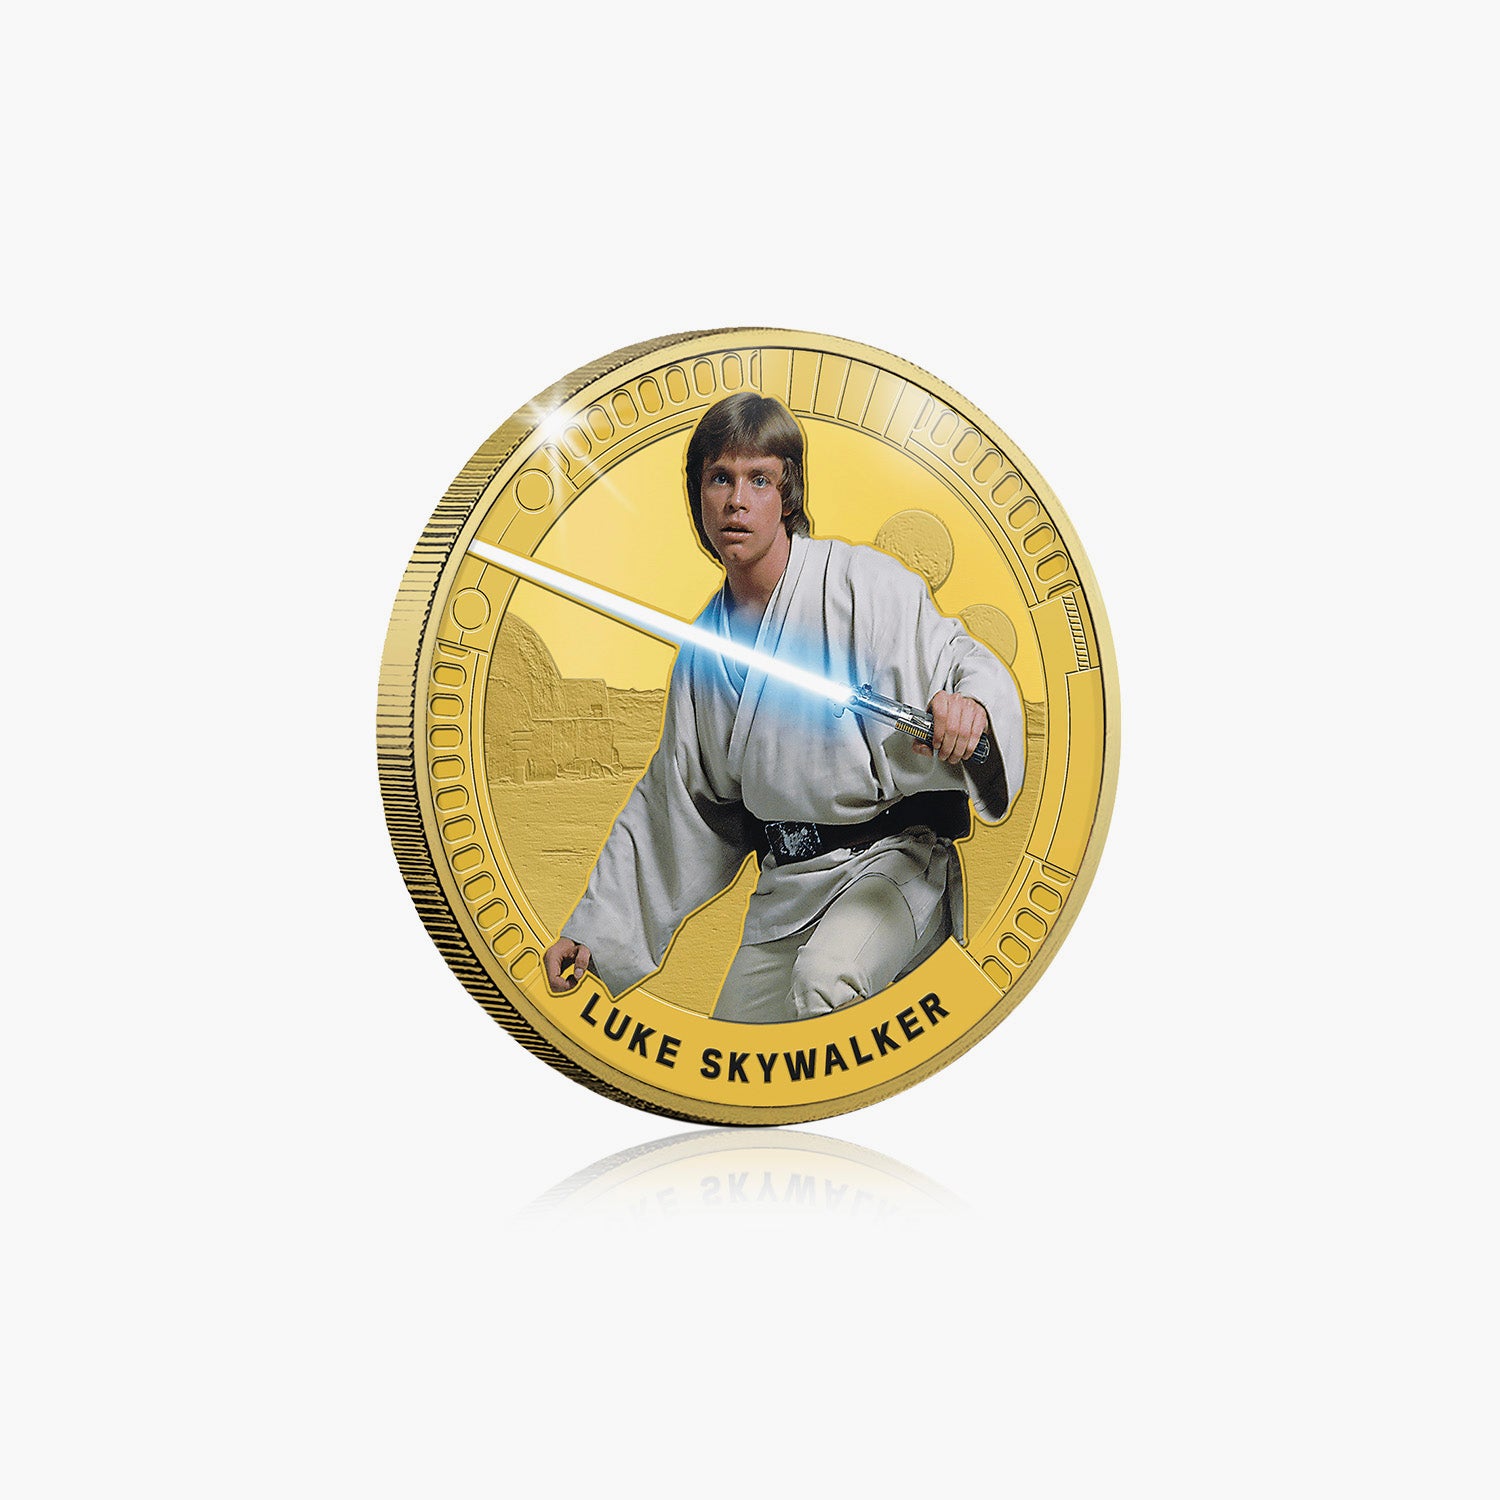 Luke Skywalker Gold - Plated Commemorative